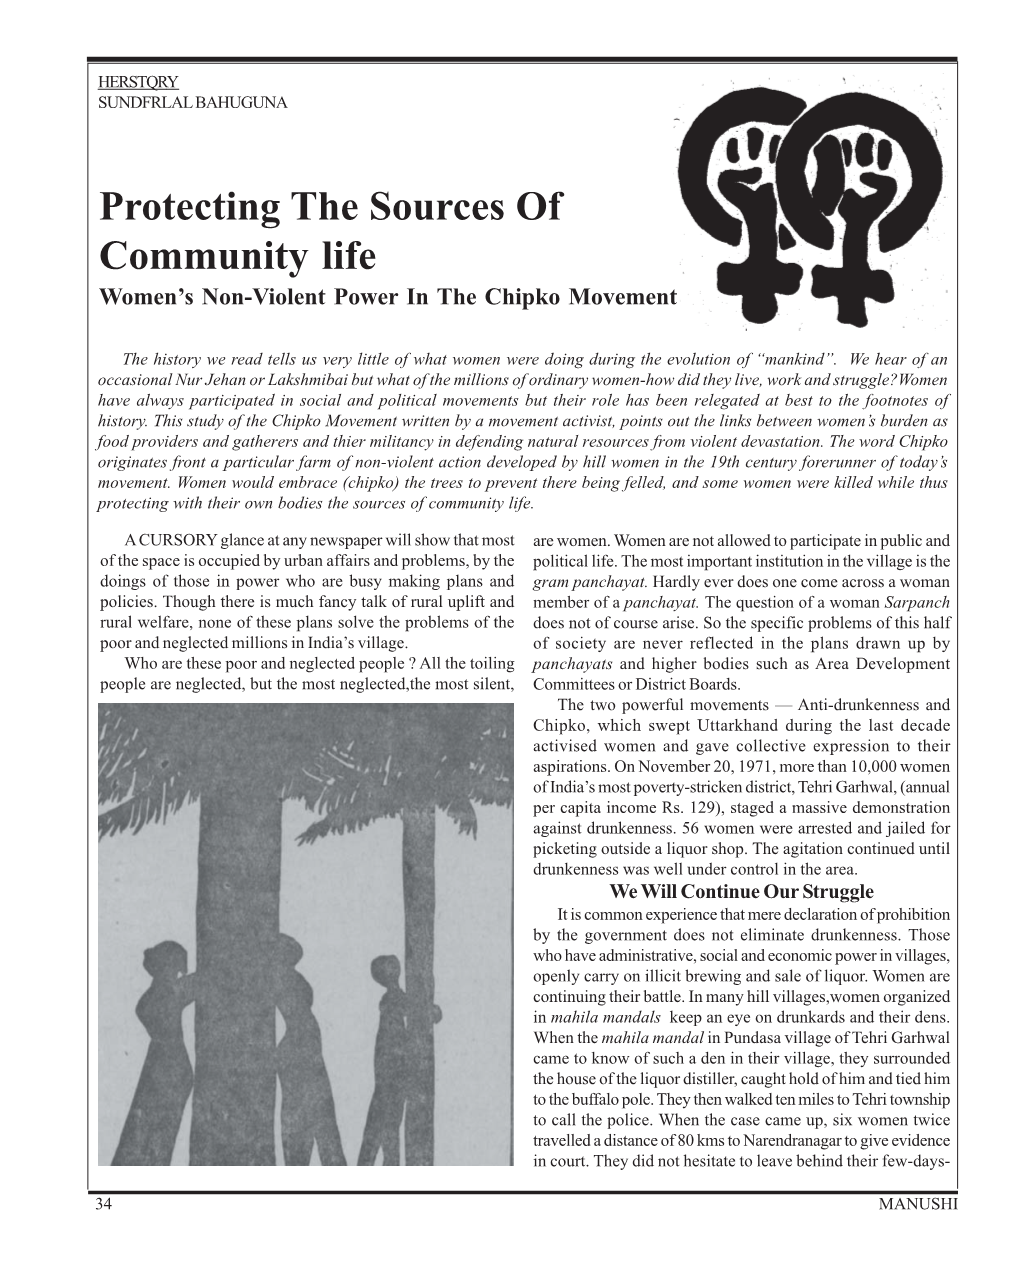 Women's Non-Violent Power in the Chipko Movement